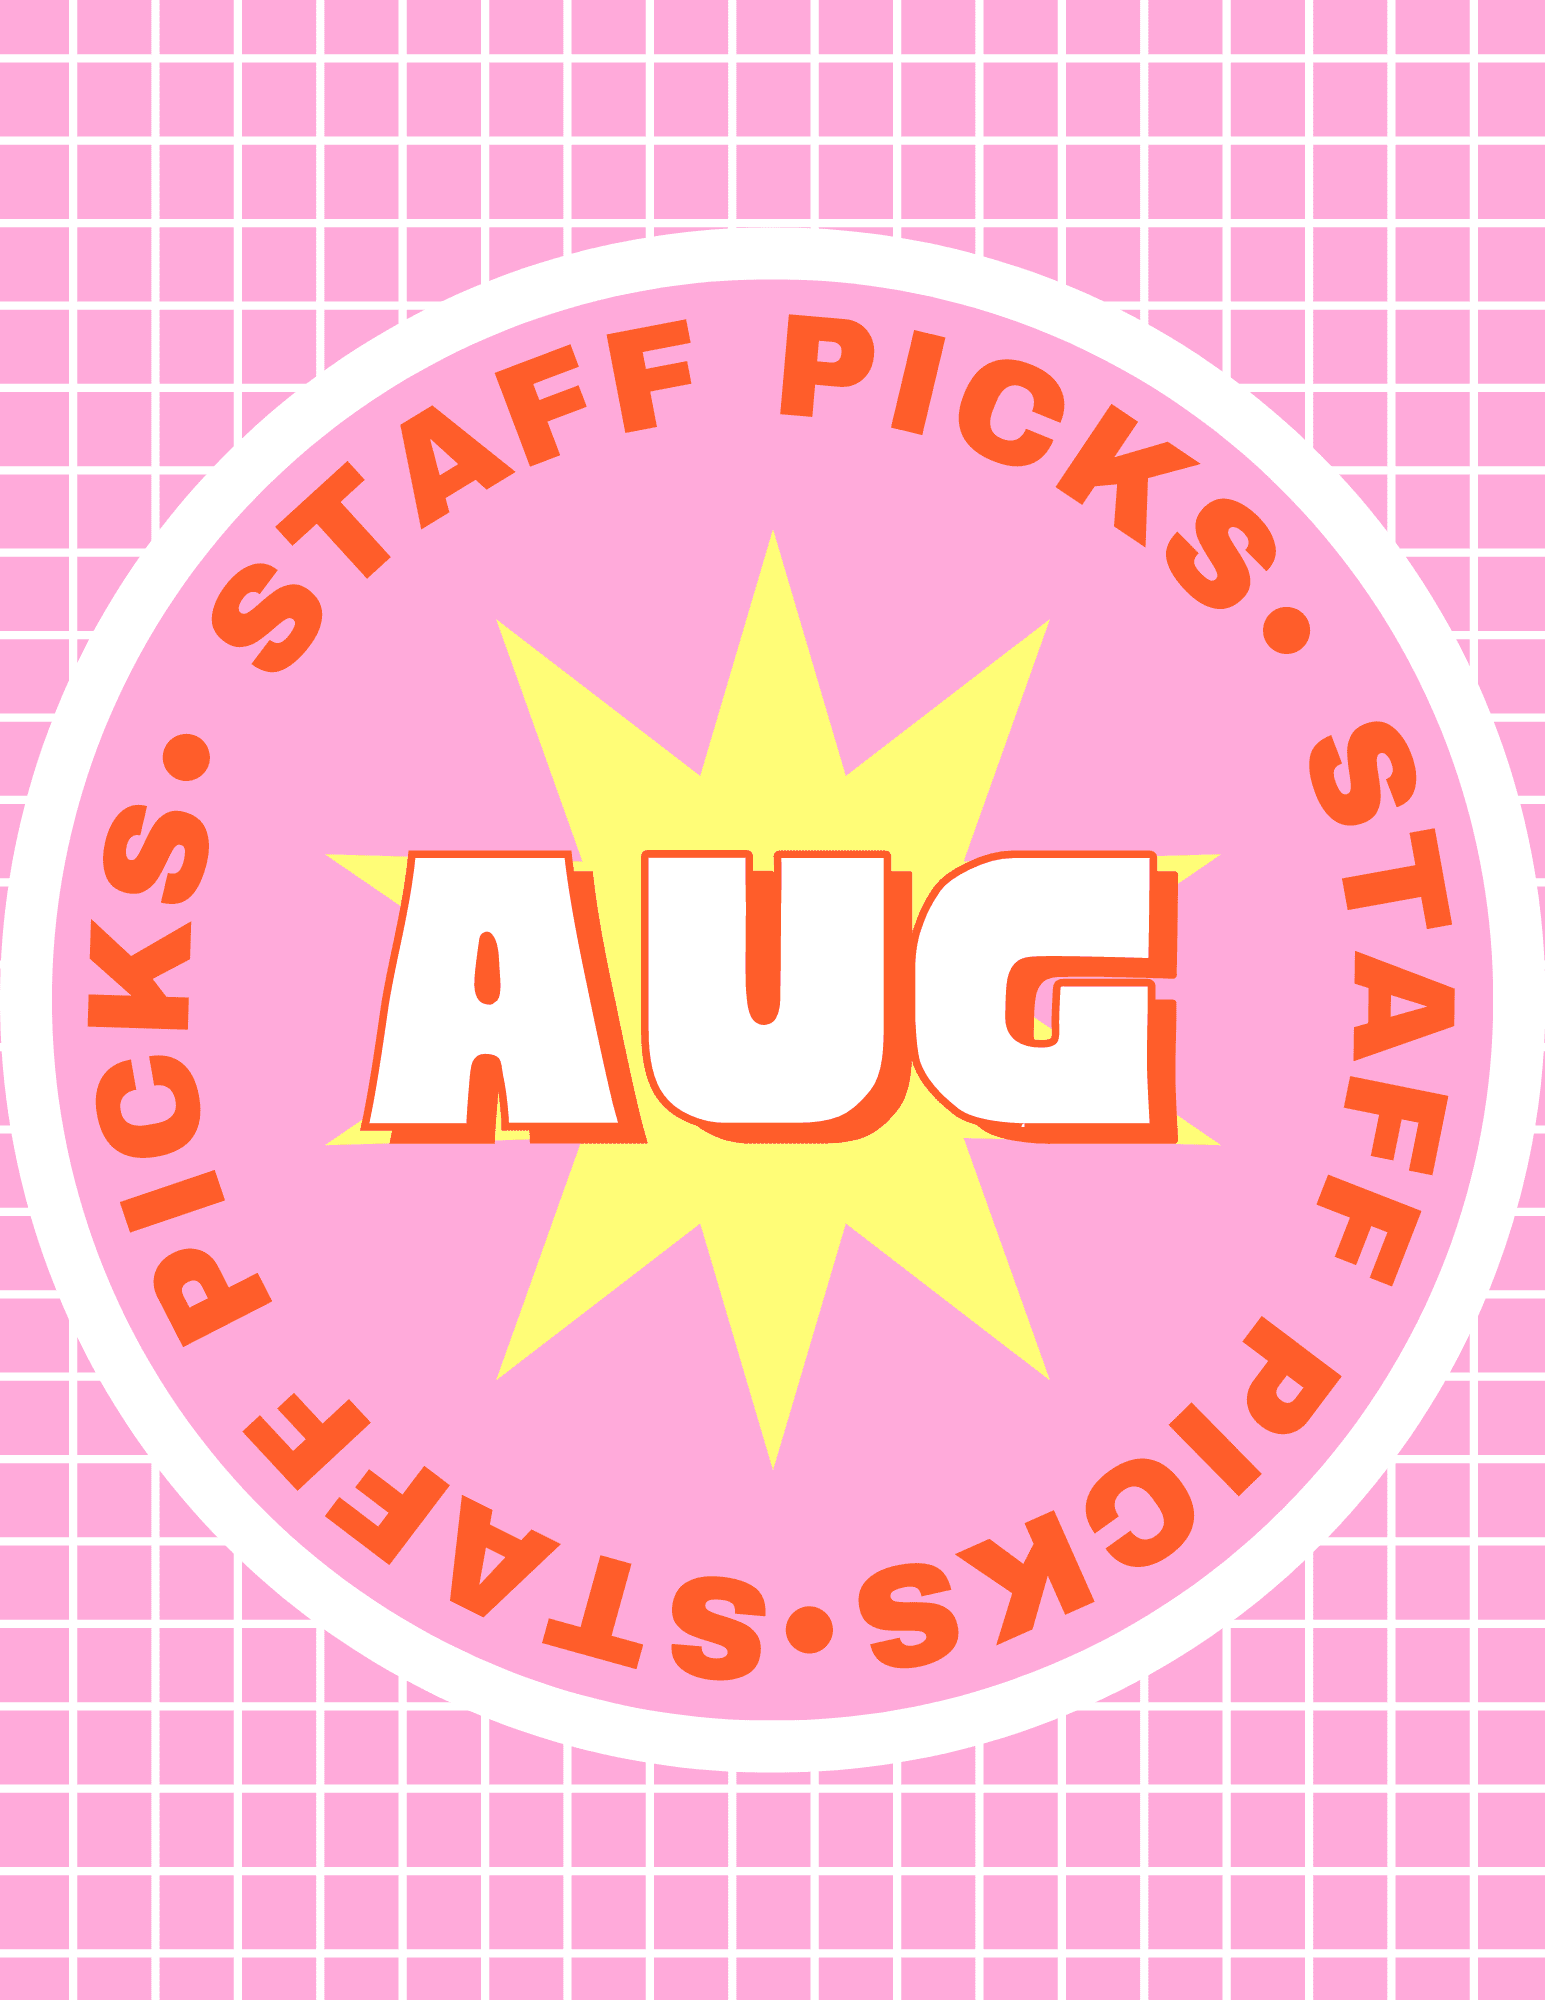 August Staff Picks!